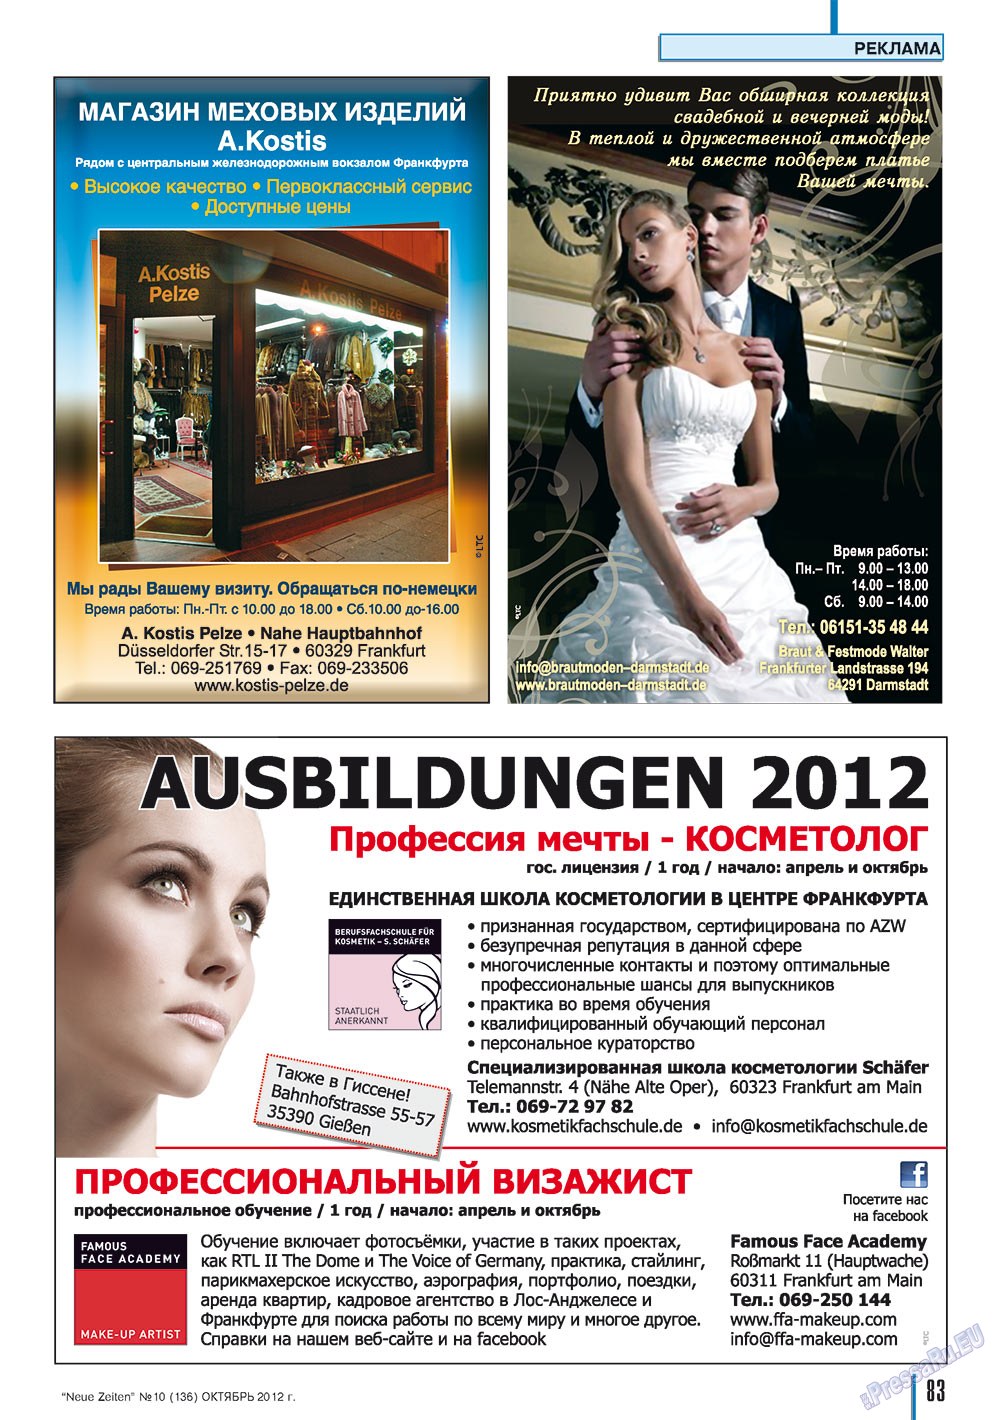 Neue Zeiten (журнал). 2012 год, номер 10, стр. 83